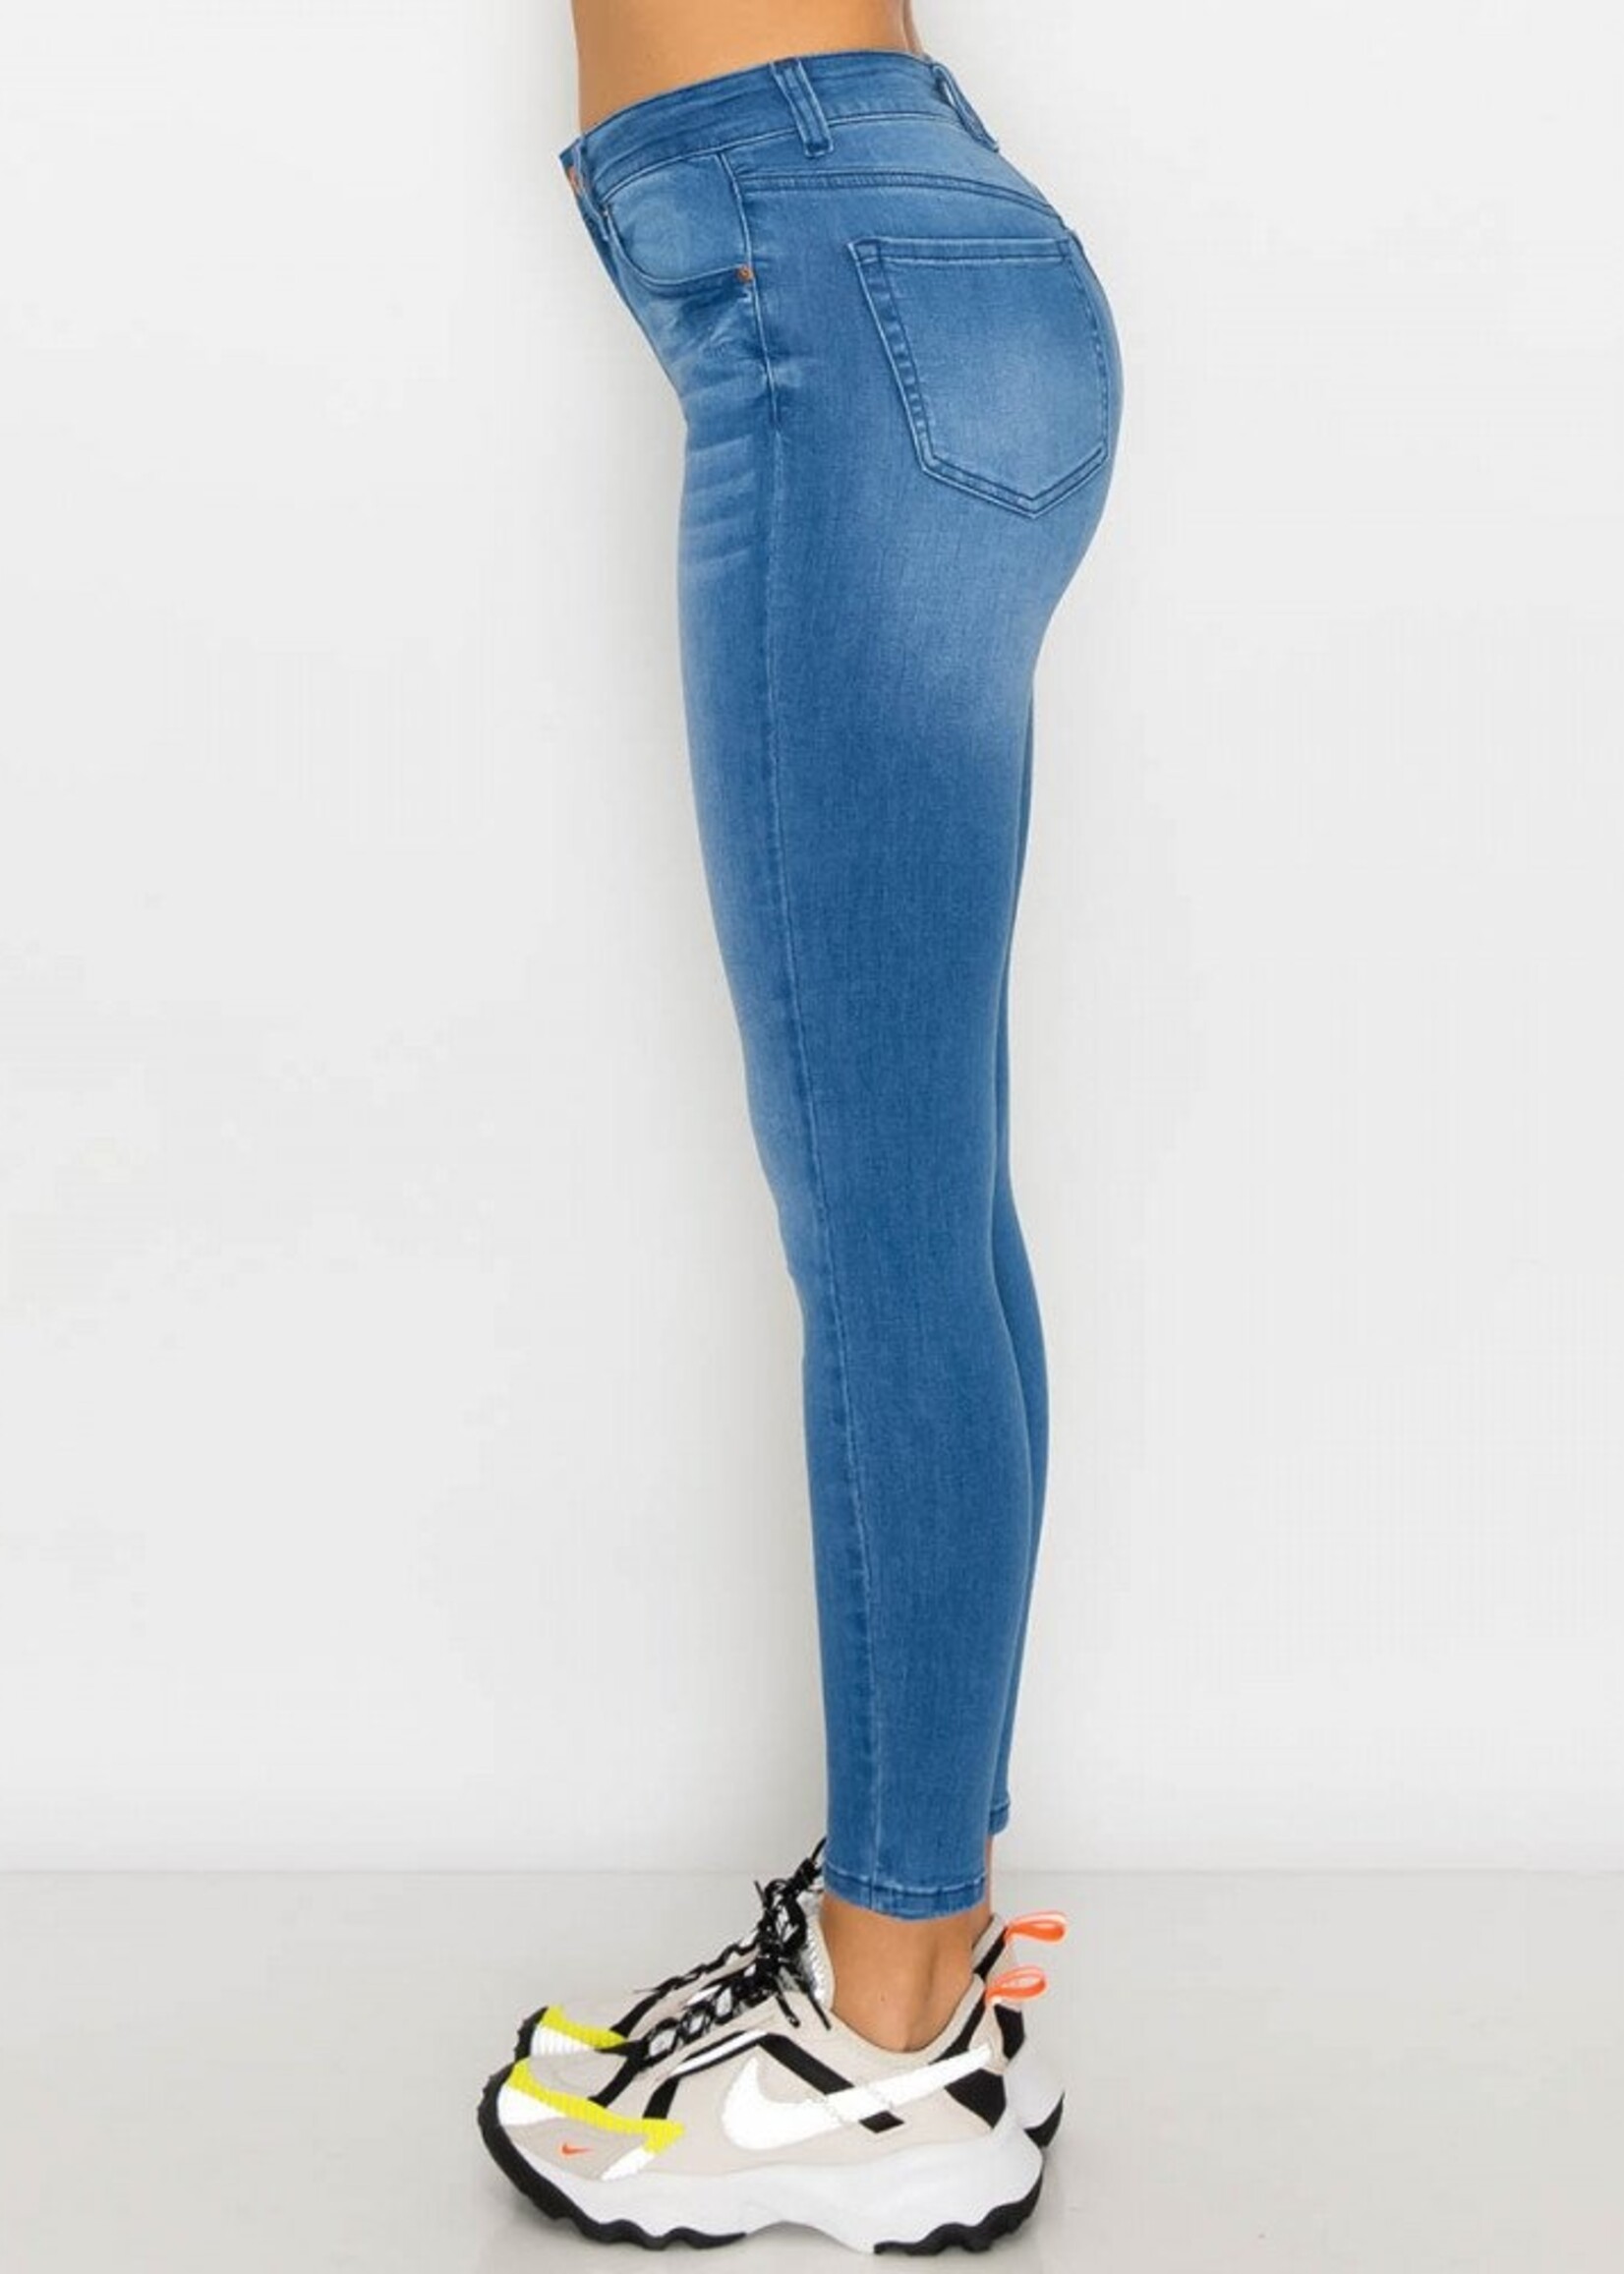 Wax Jean - Modal Fabric Basic Skinny Jean - 90238